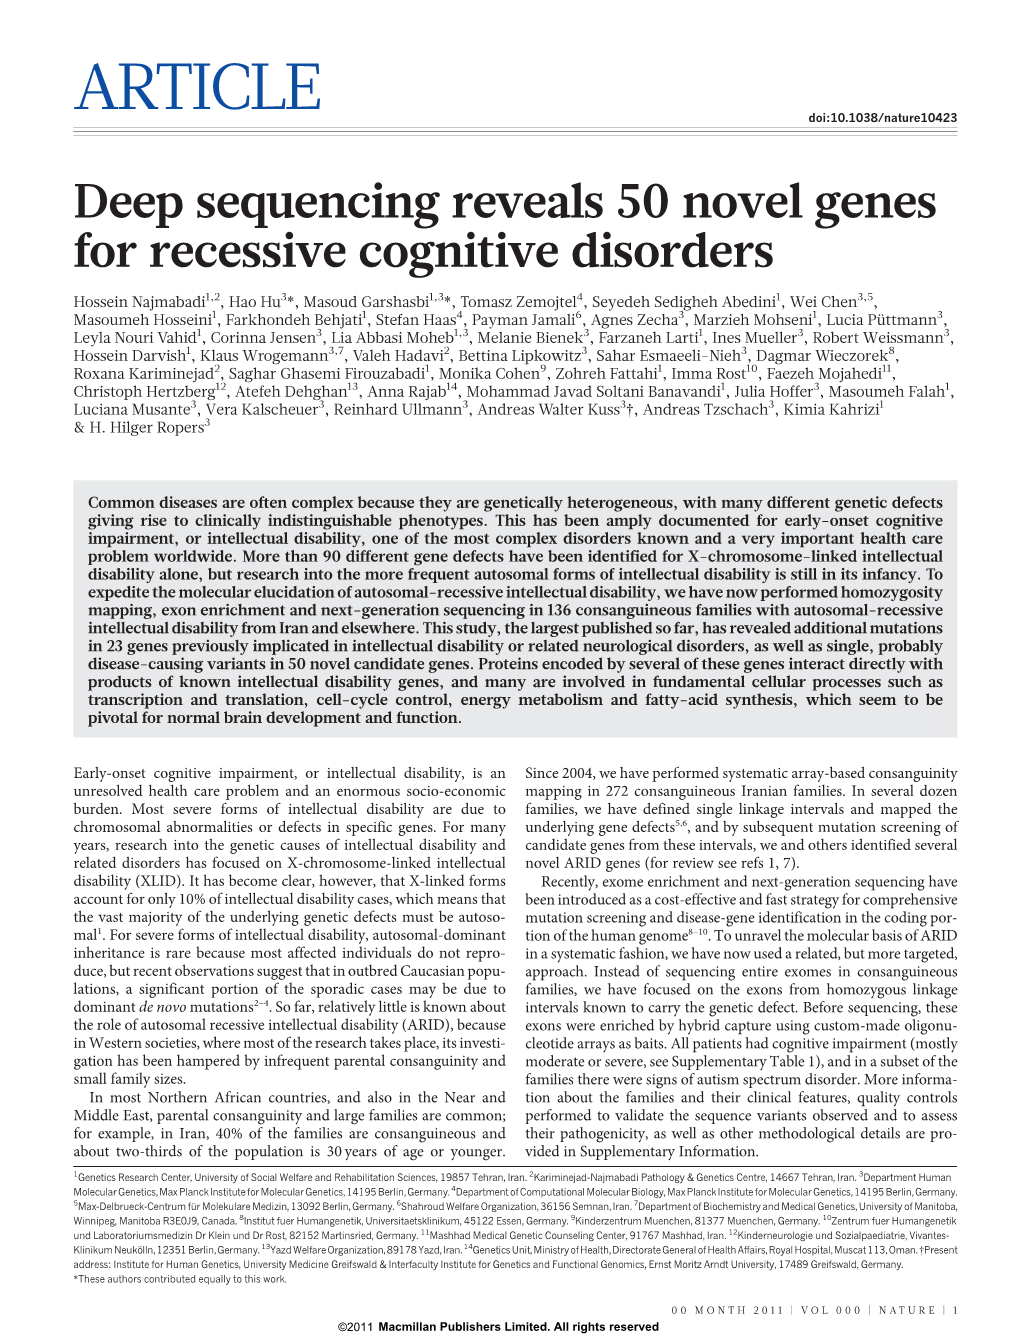 Deep Sequencing Reveals 50 Novel Genes for Recessive Cognitive Disorders